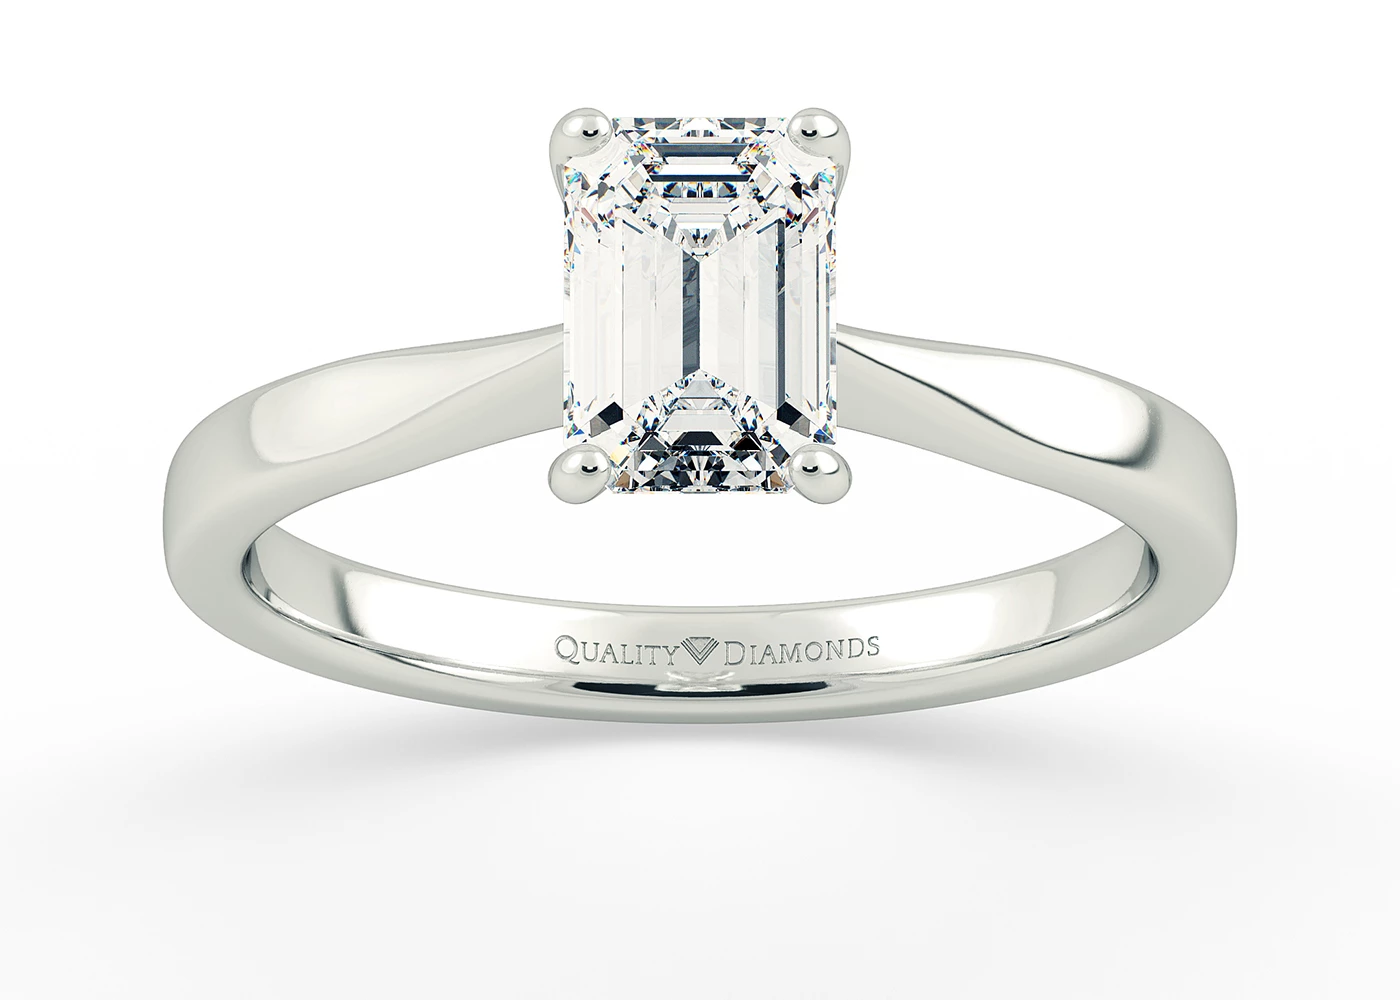 Emerald Beau Diamond Ring in 18K White Gold